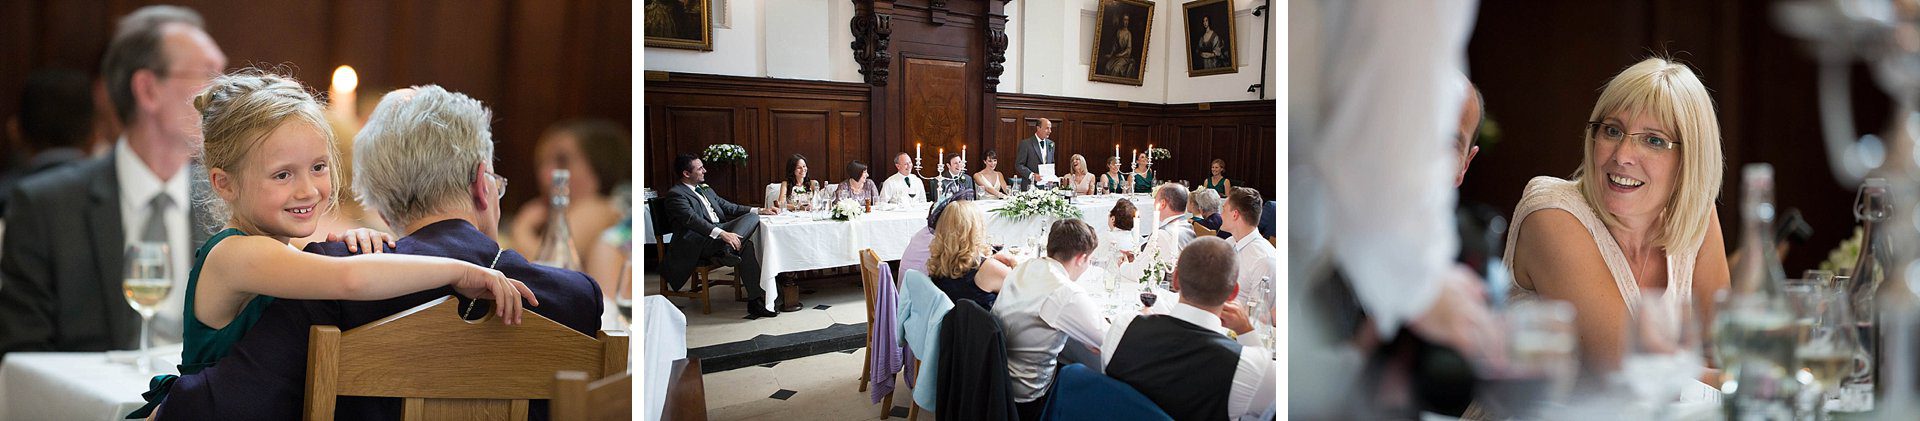 Oxford wedding - the speeches